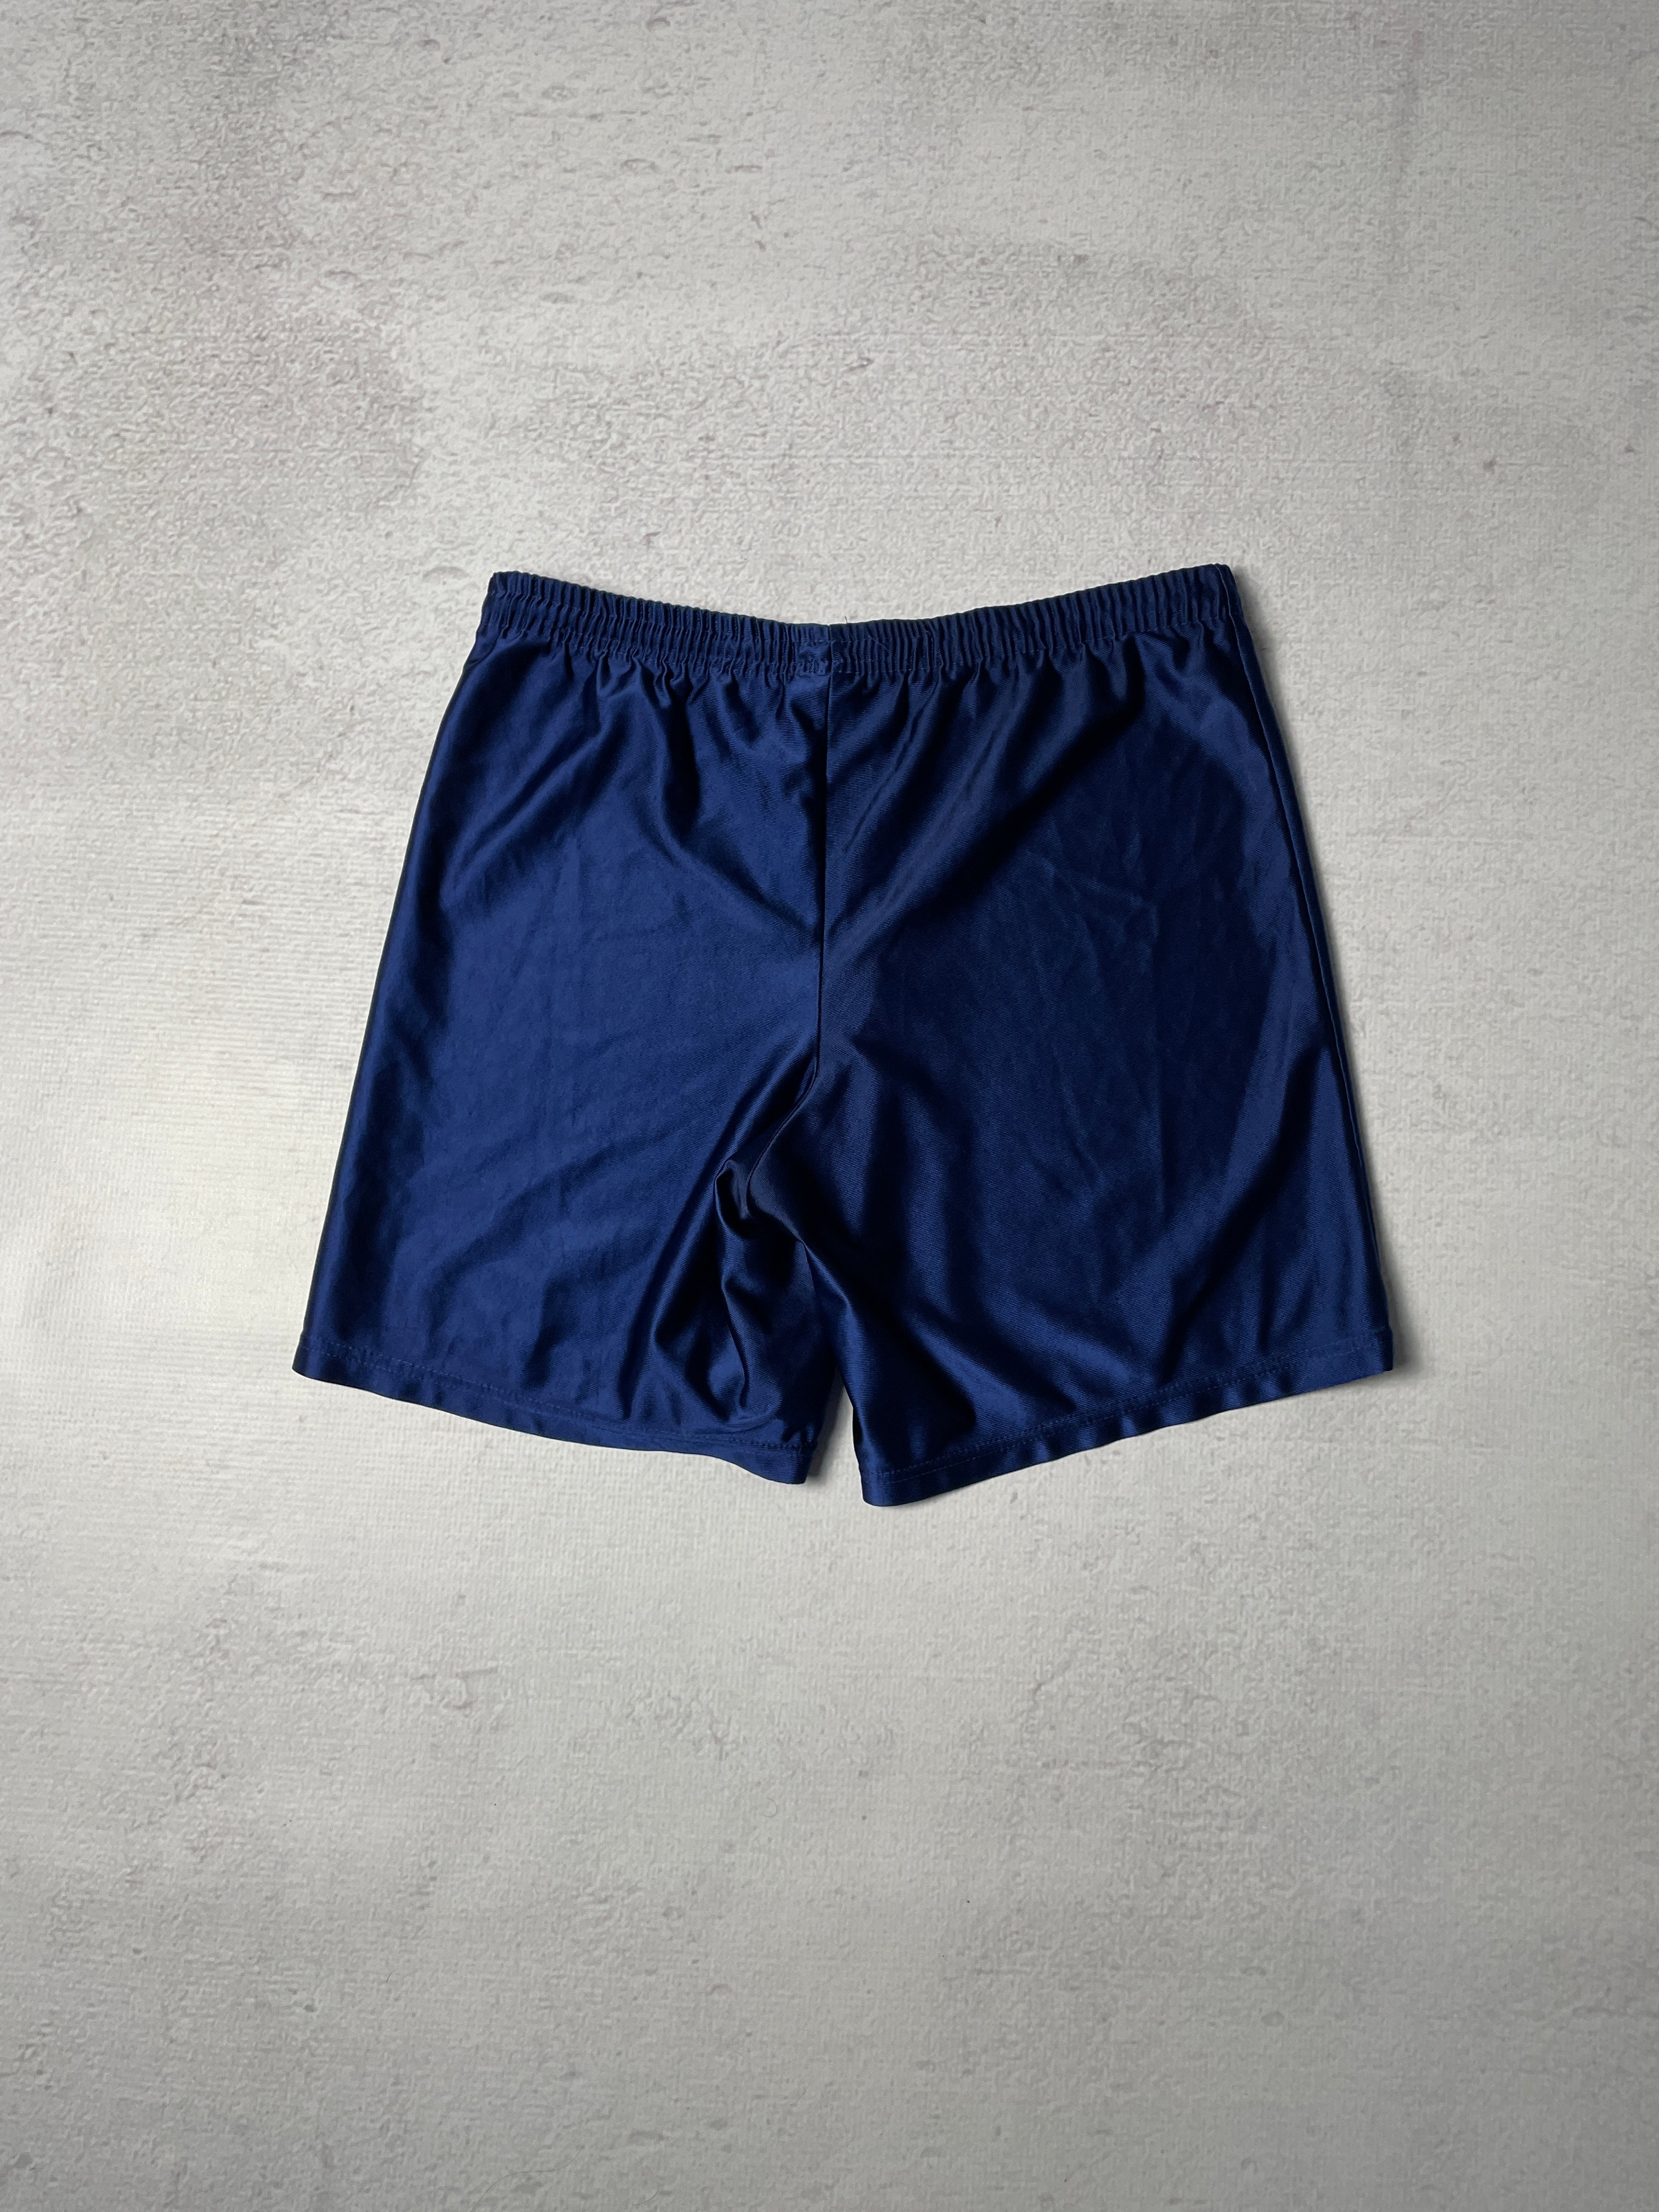 Vintage Nike Athletic Shorts - Men's Small